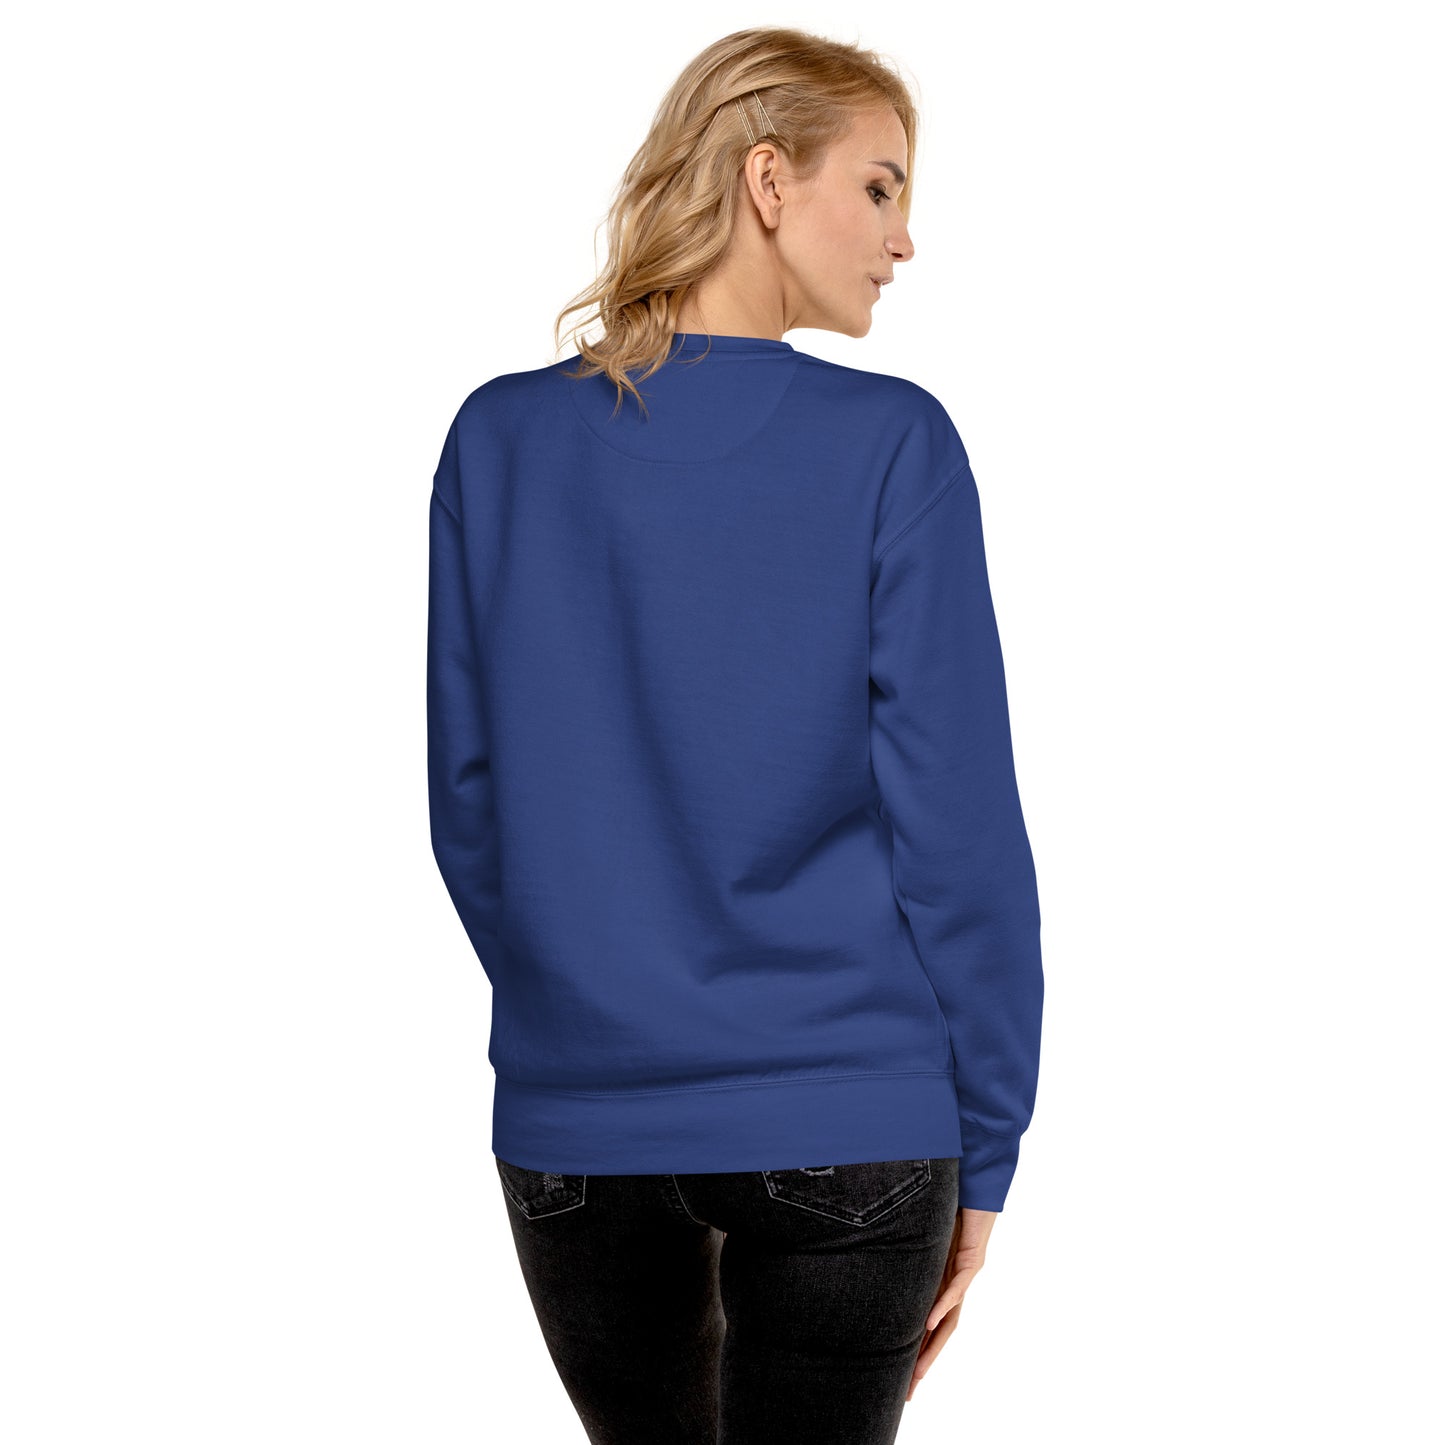 SOULSKY Classic Crew Sweatshirt - Royal Blue